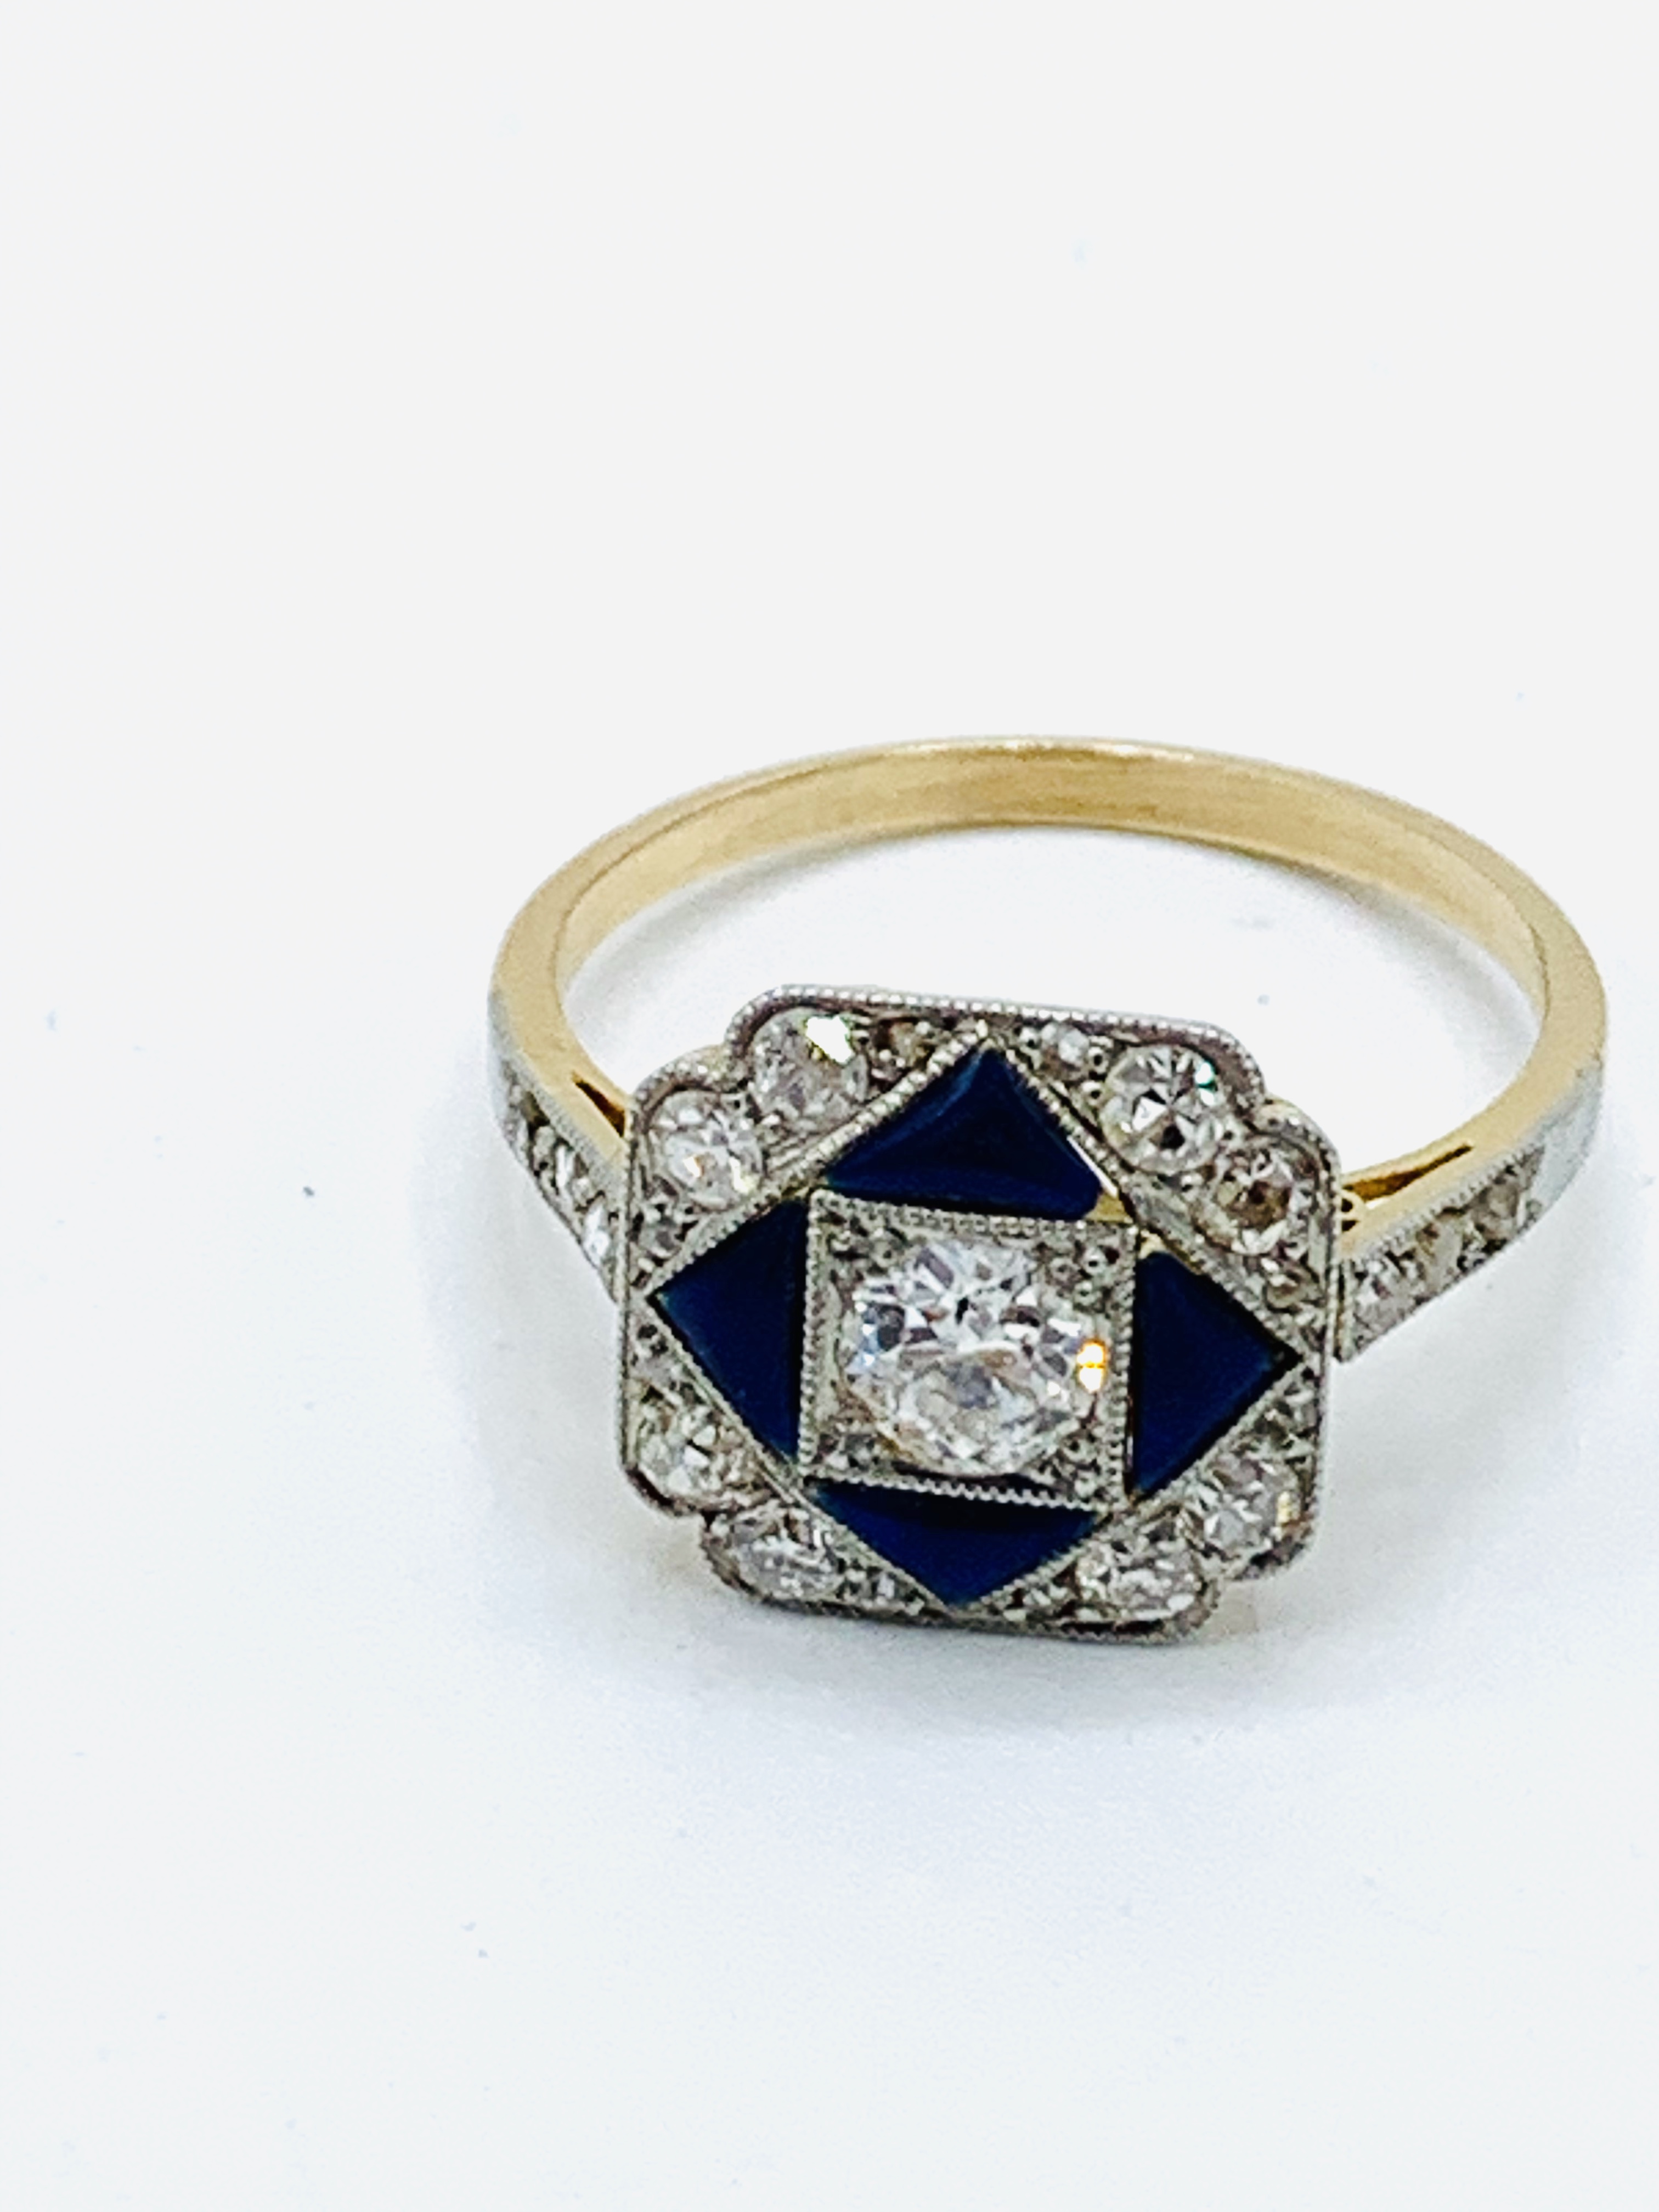 Diamond and blue enamel ring. - Image 8 of 9